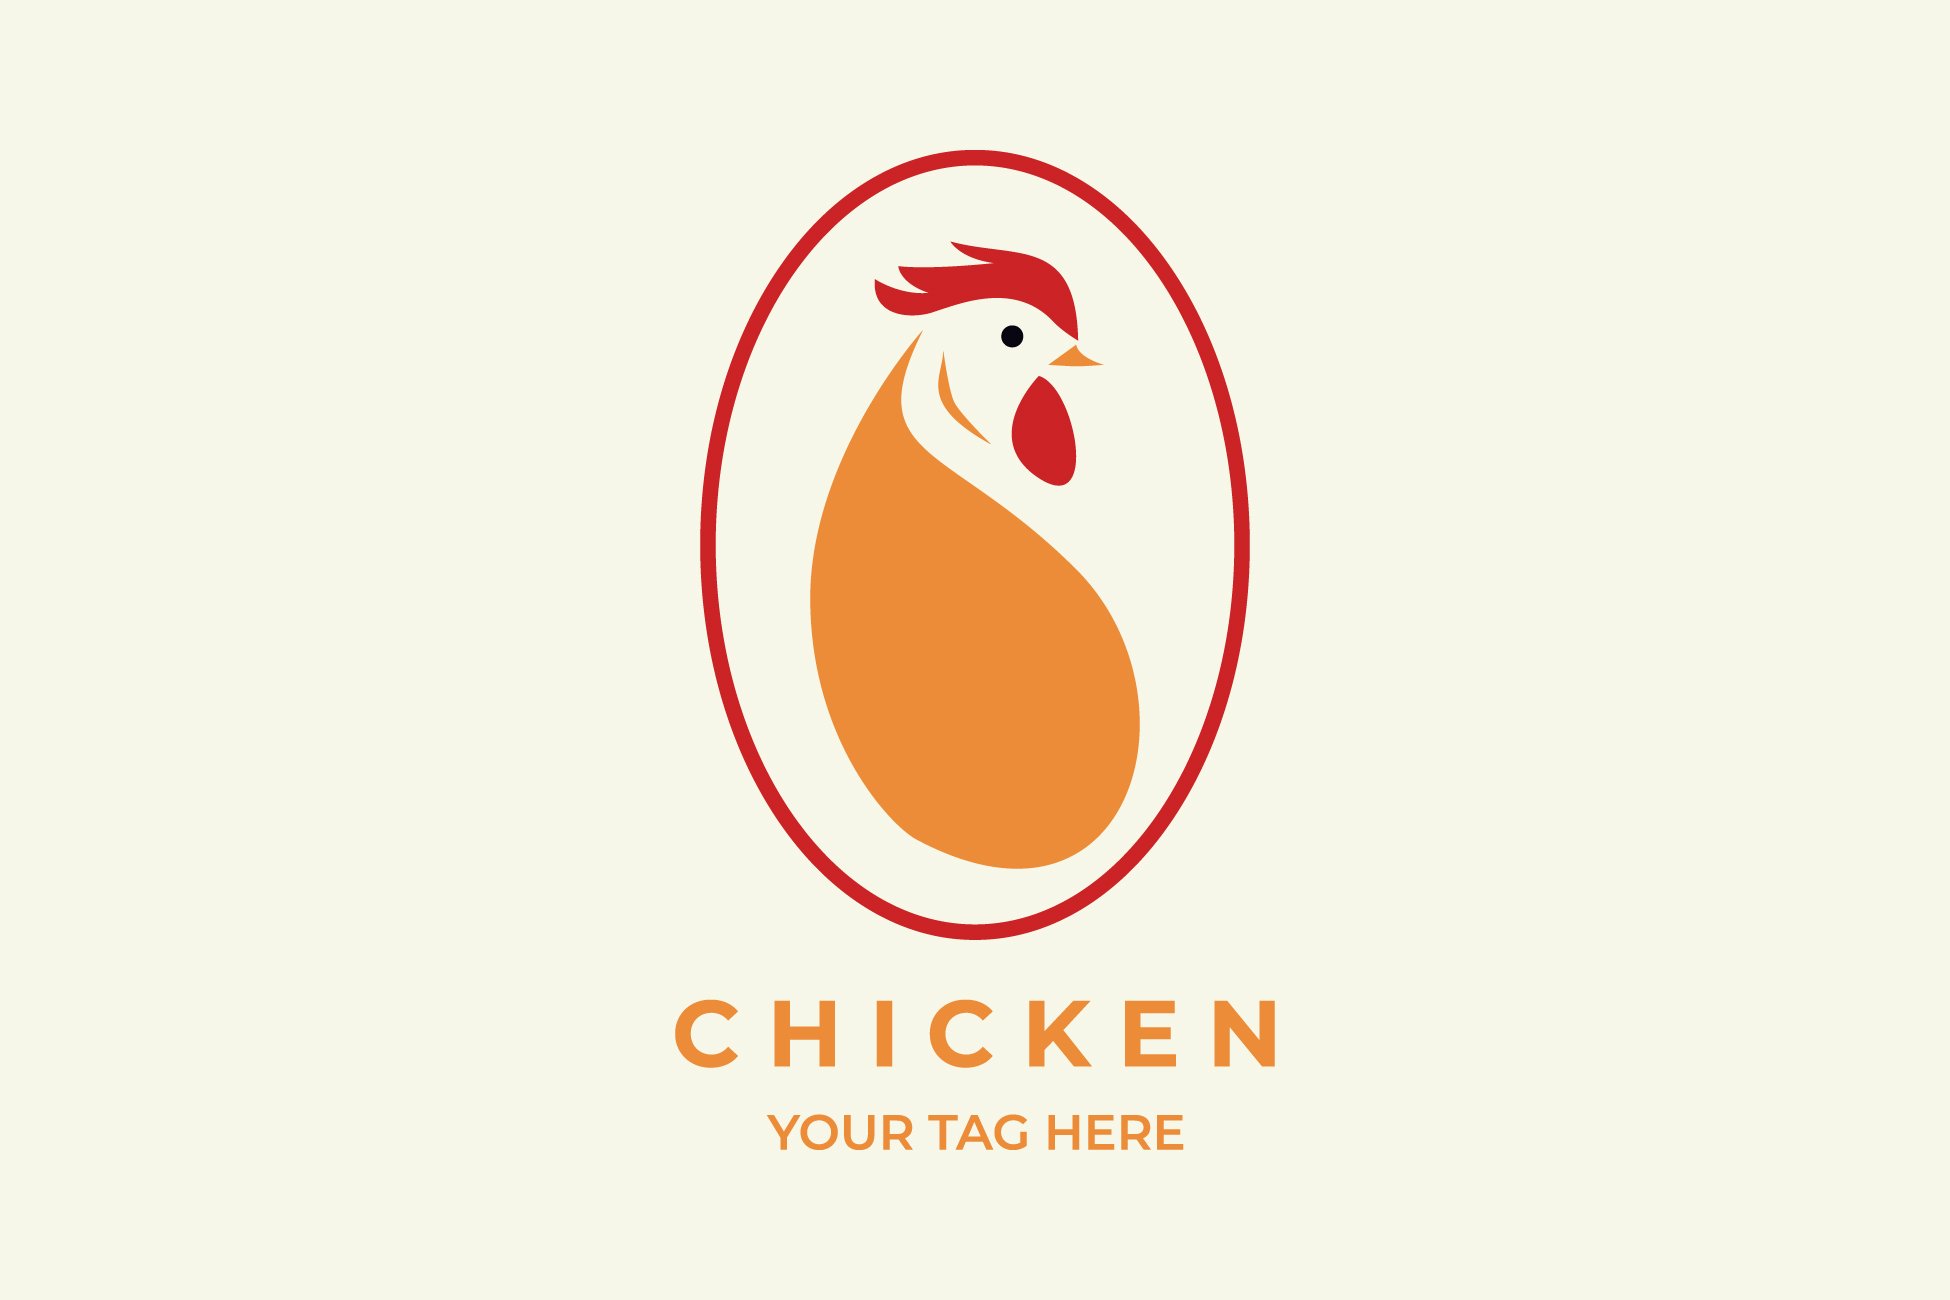 chicken logo illustration color cover image.